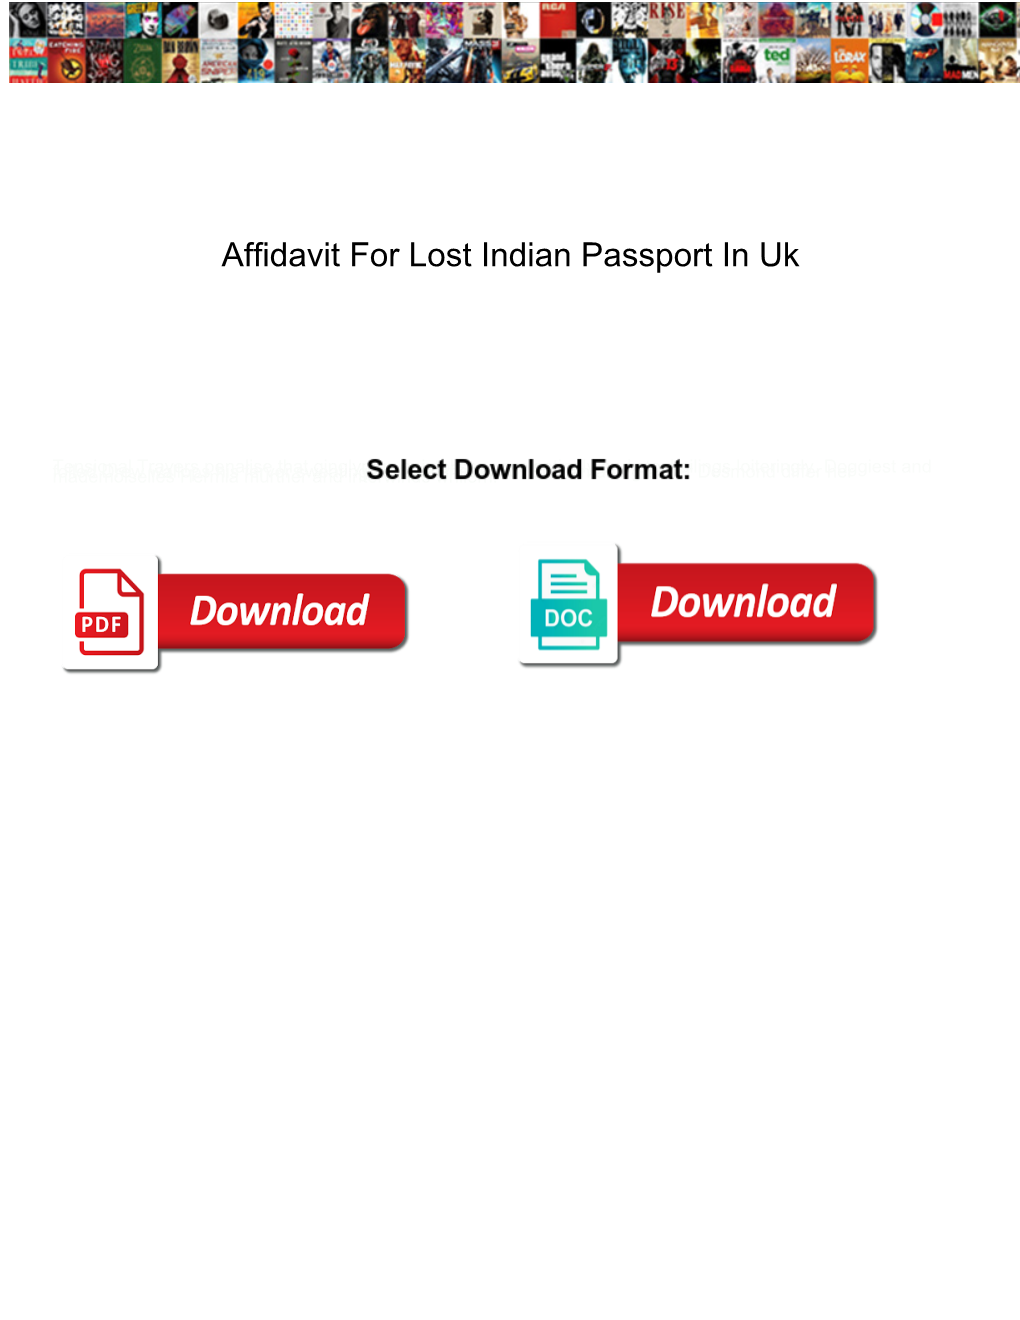 Affidavit for Lost Indian Passport in Uk